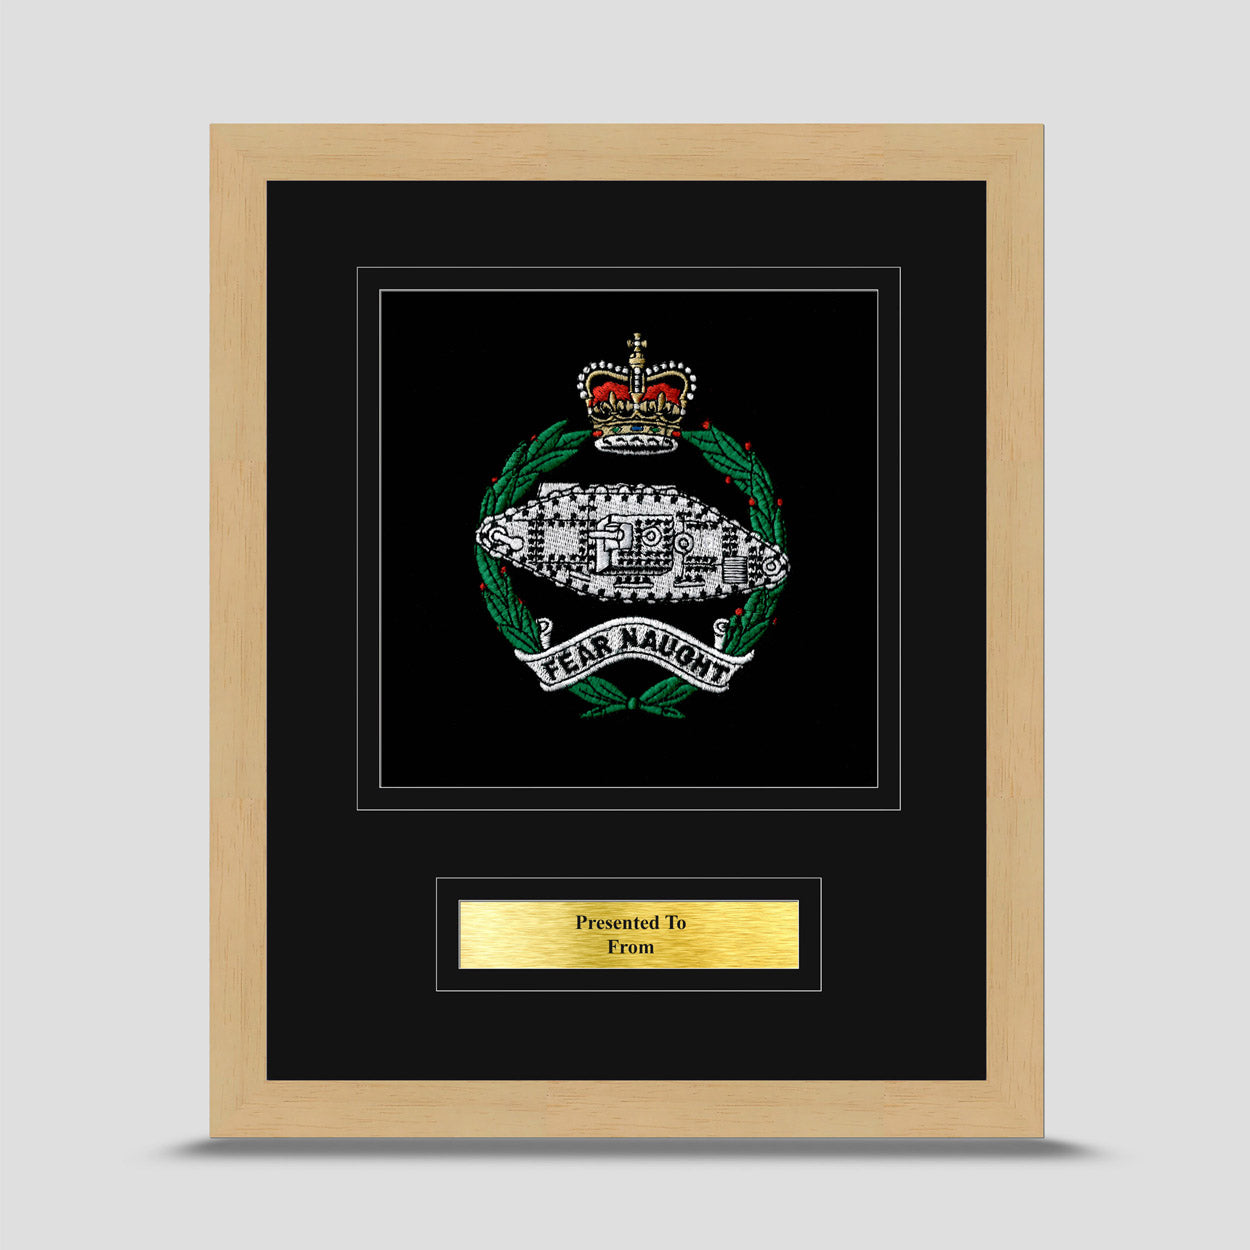 Royal Tank Regiment Framed Military Embroidery Presentation RTR